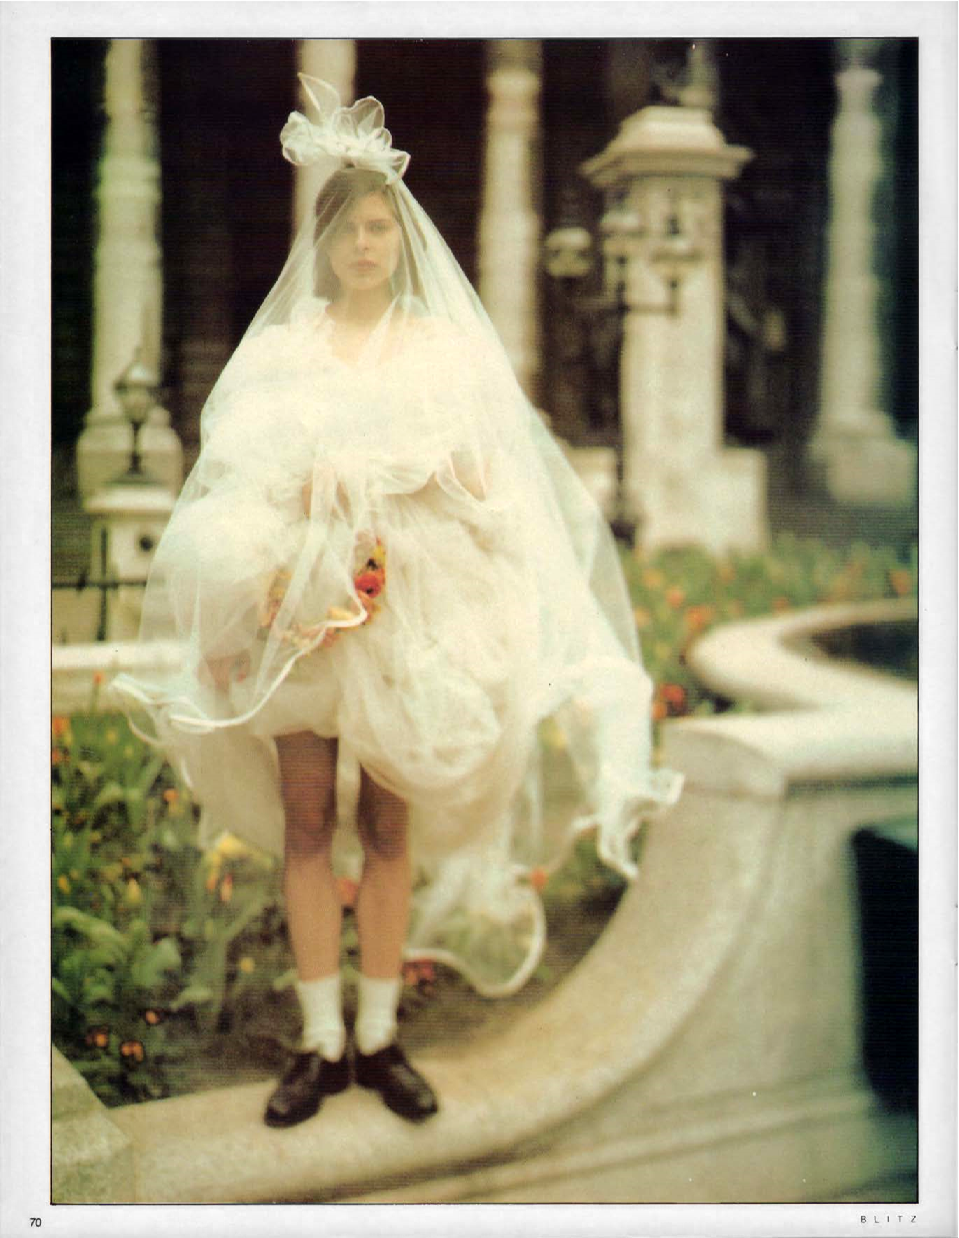 BLITZ 54 Jun 1987 fashion styled by Iain R Webb photographs by Ronald Diltoer